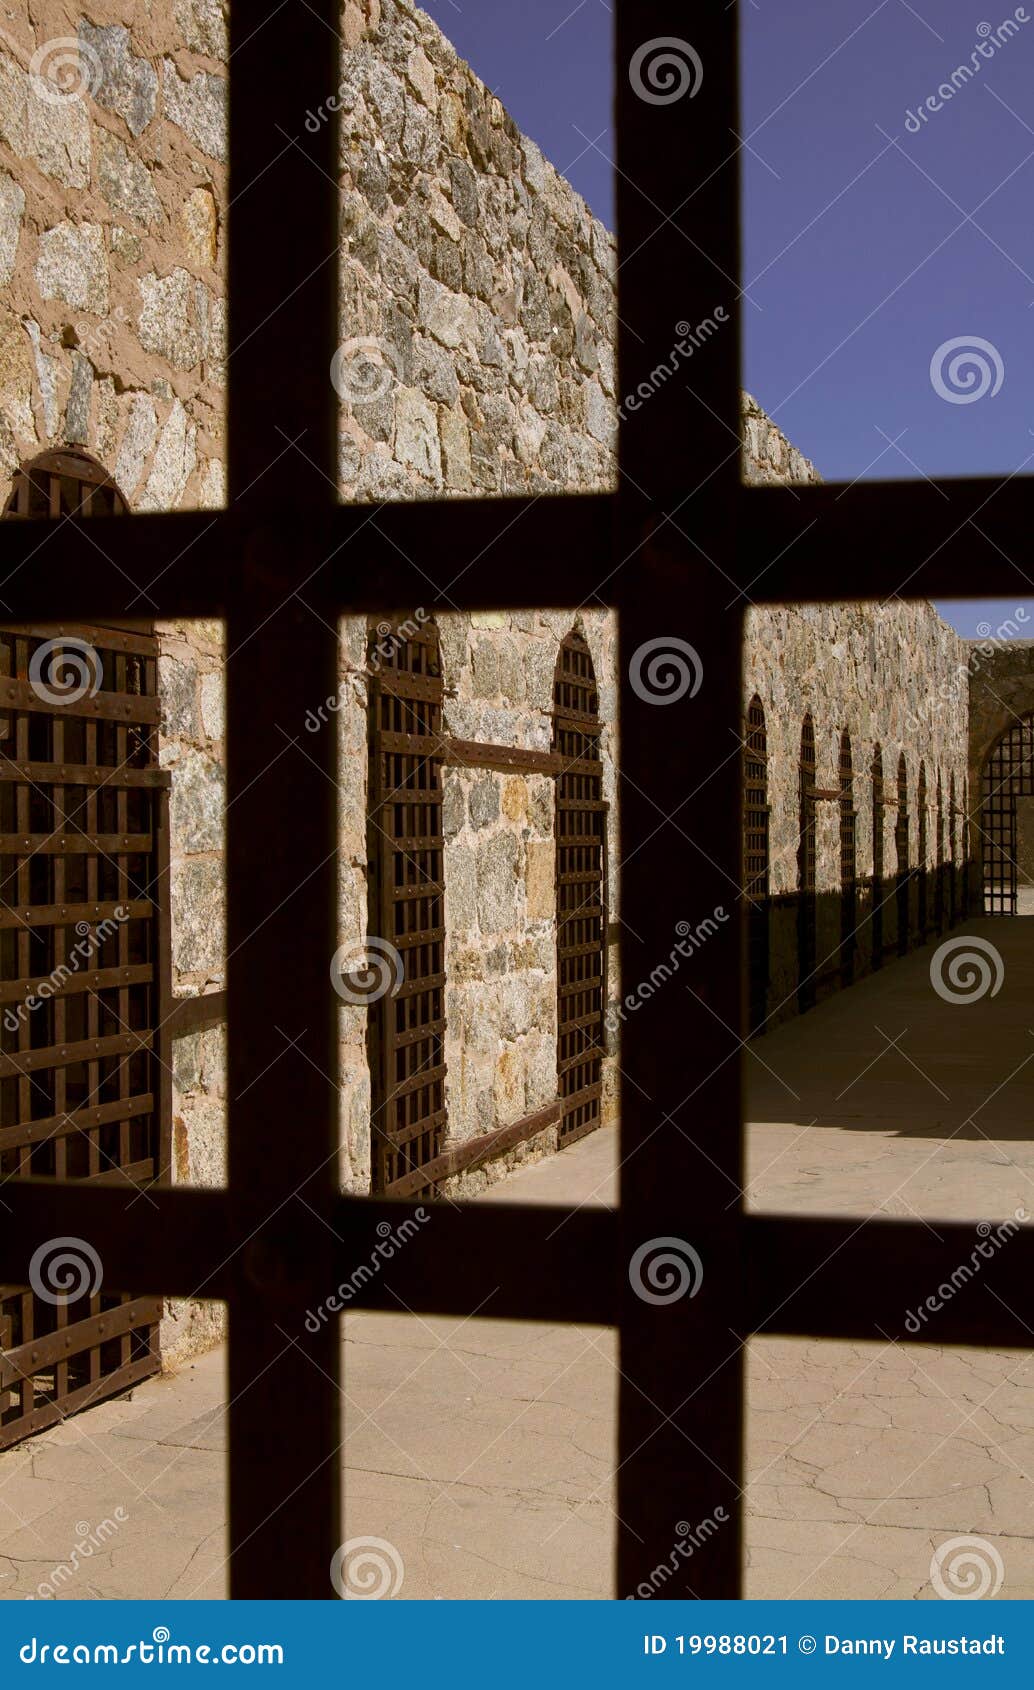 arizona territorial prison in yuma, arizona, usa